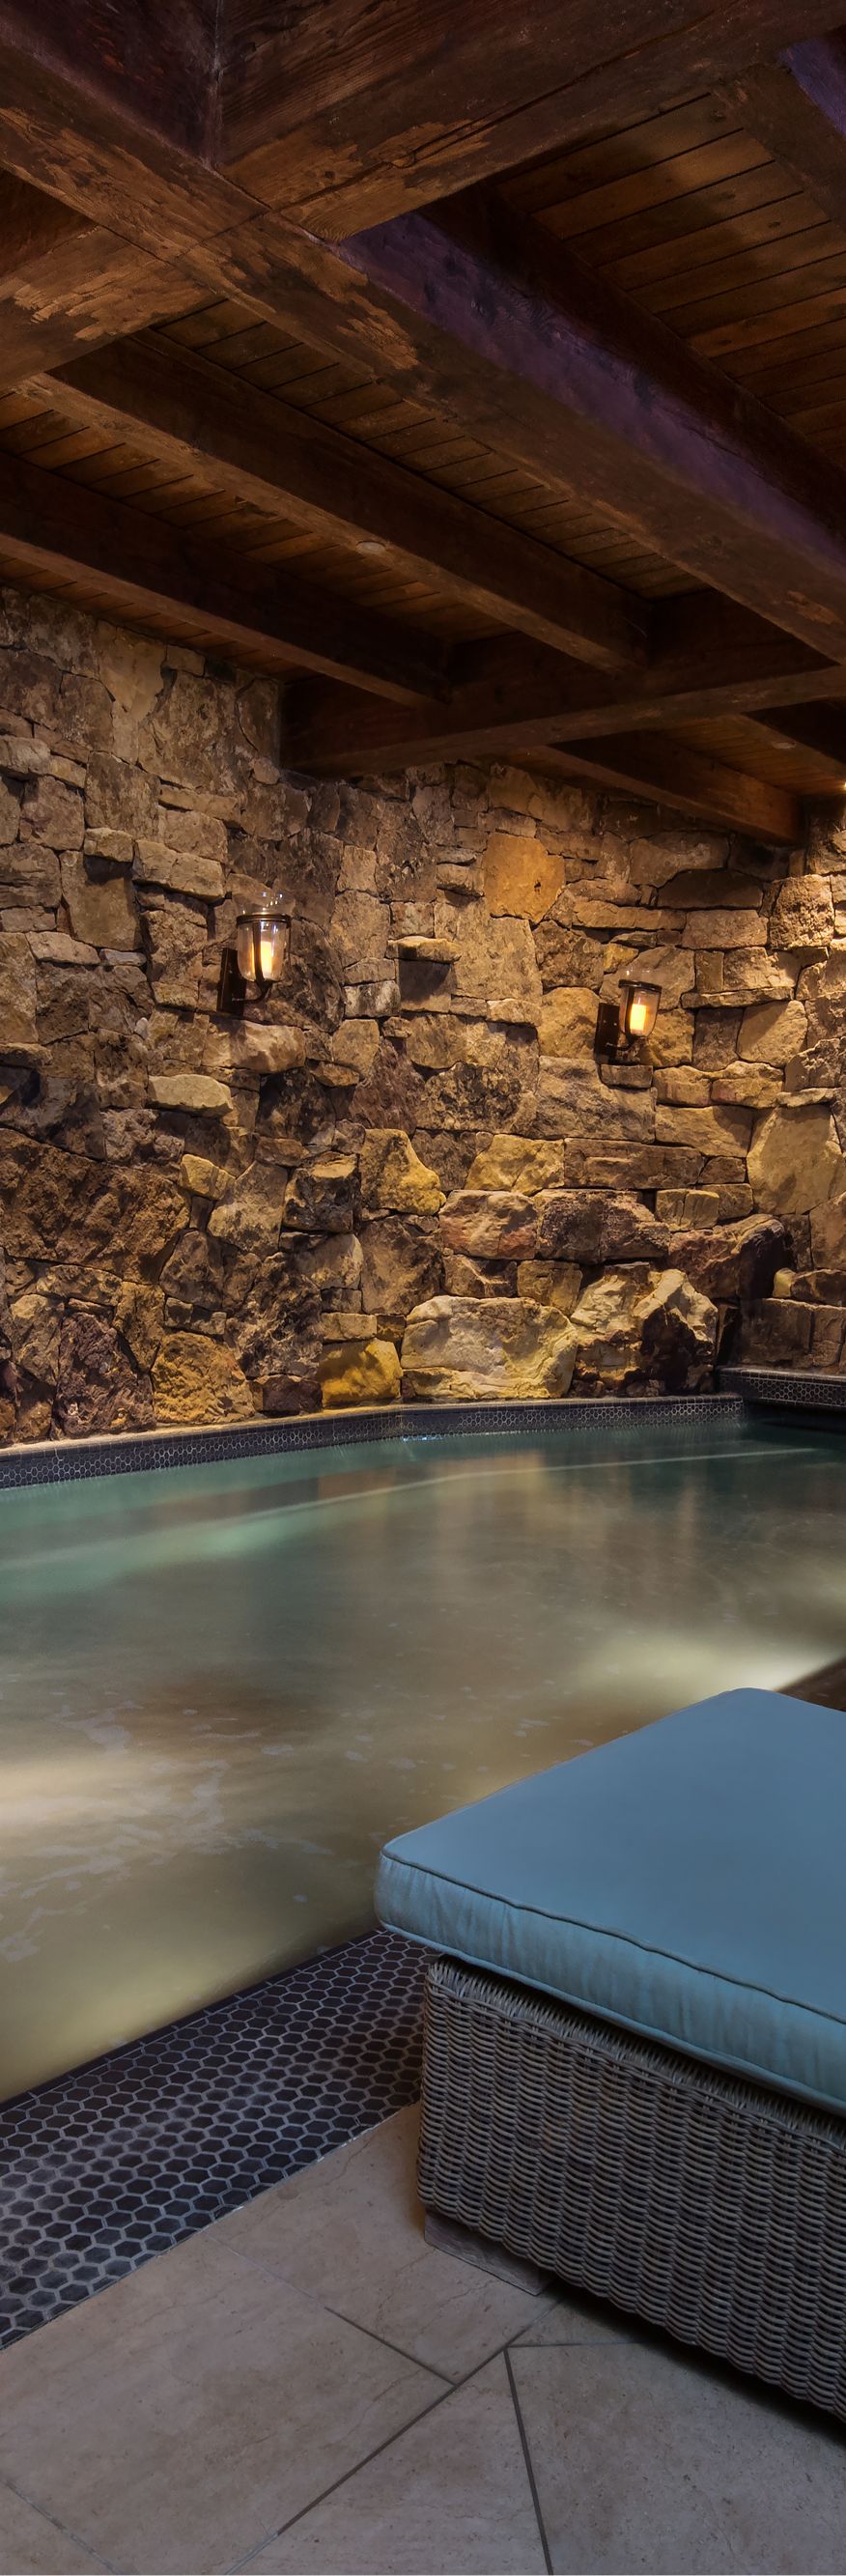 The Ritz Carlton Bachelor Gulch - Beaver Creek, Colorado - Luxury